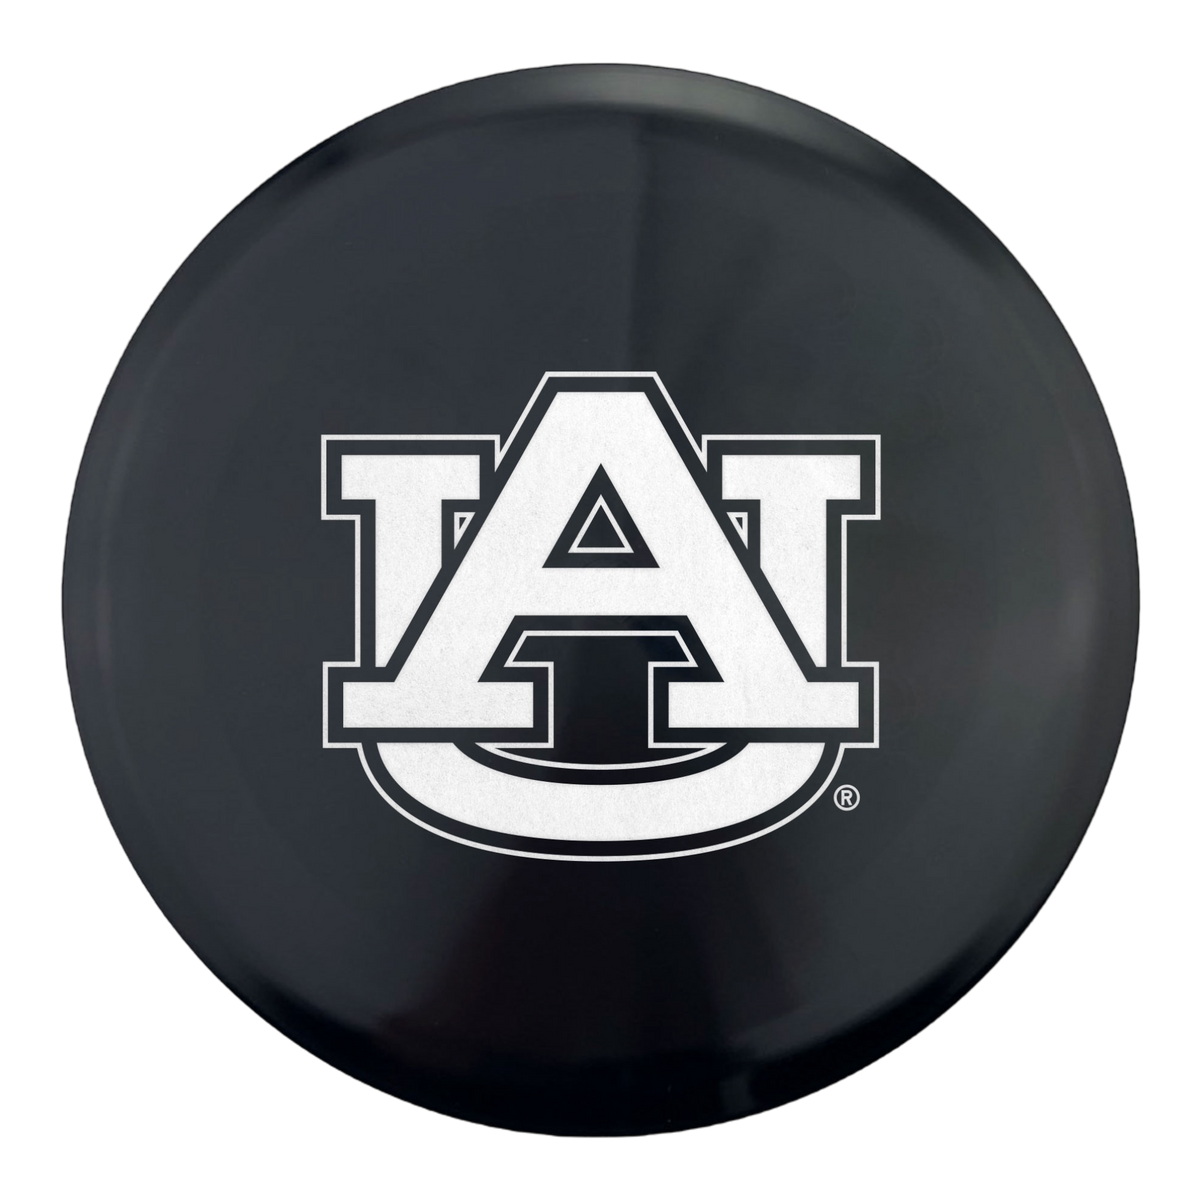 Prodigy 400 F3 - Auburn University (Pre-Order)